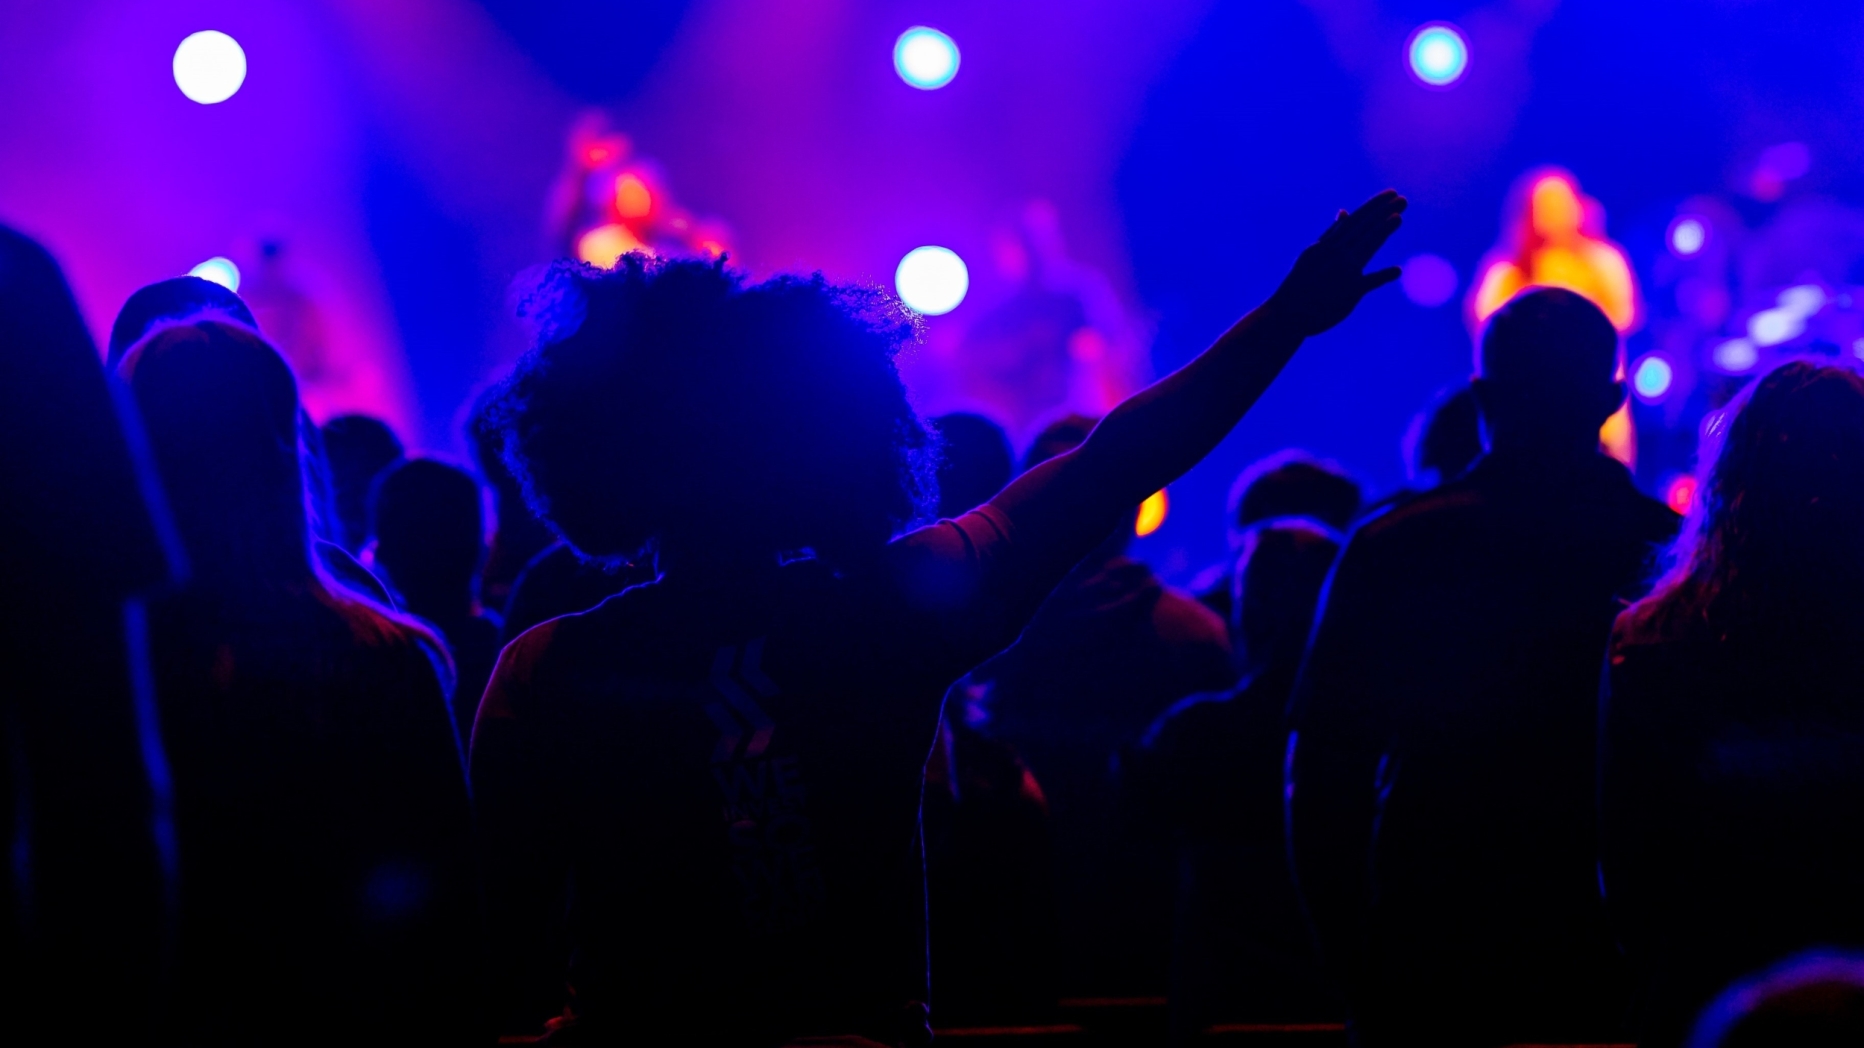 Crowded nightclub, people dancing and bright purple lights flashing.